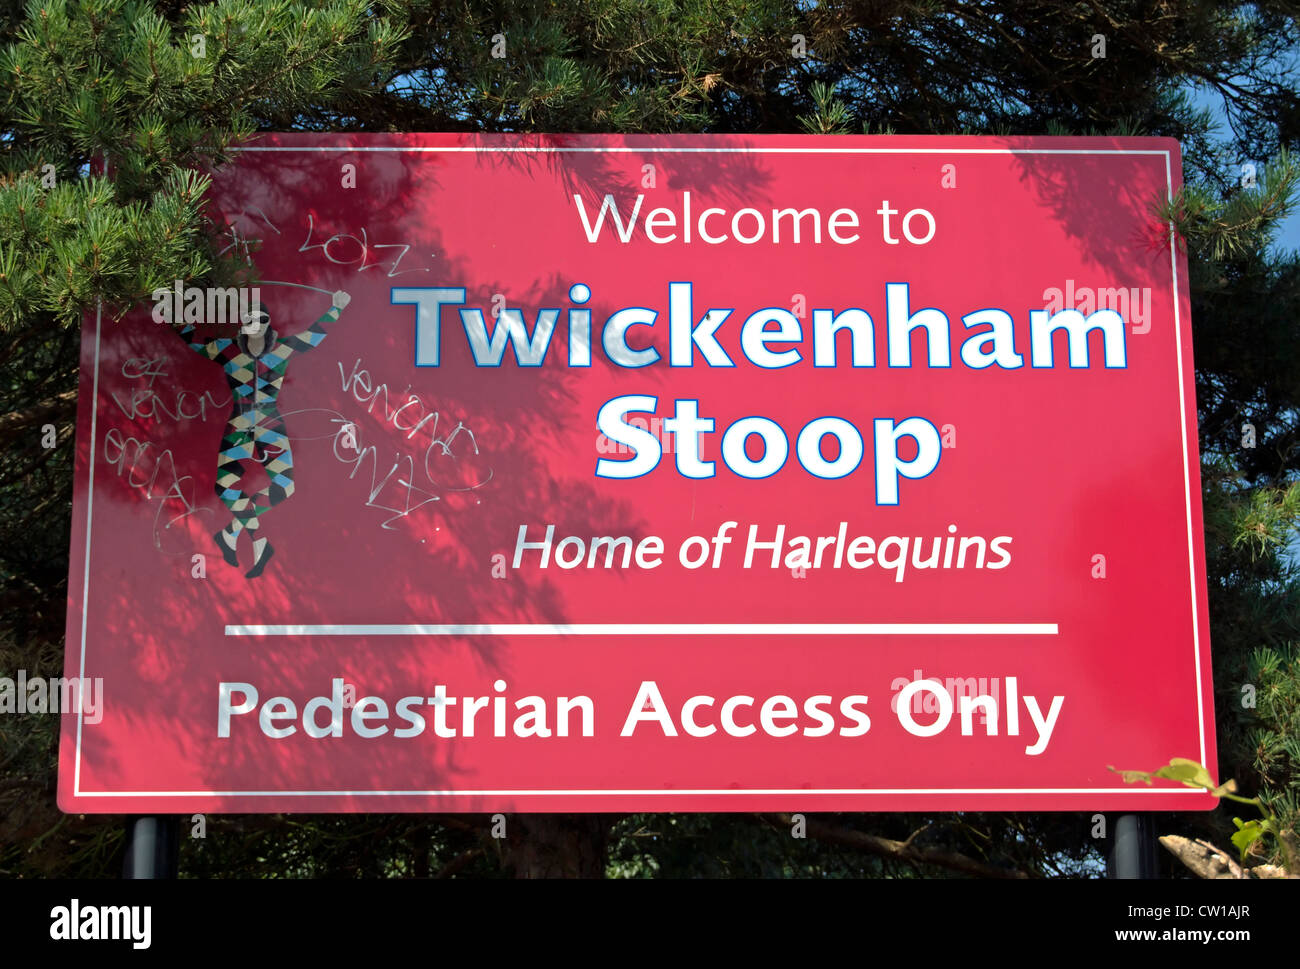 Benvenuti al Twickenham Stoop segno, al rugby ground di quel nome a Twickenham, middlesex, Inghilterra Foto Stock